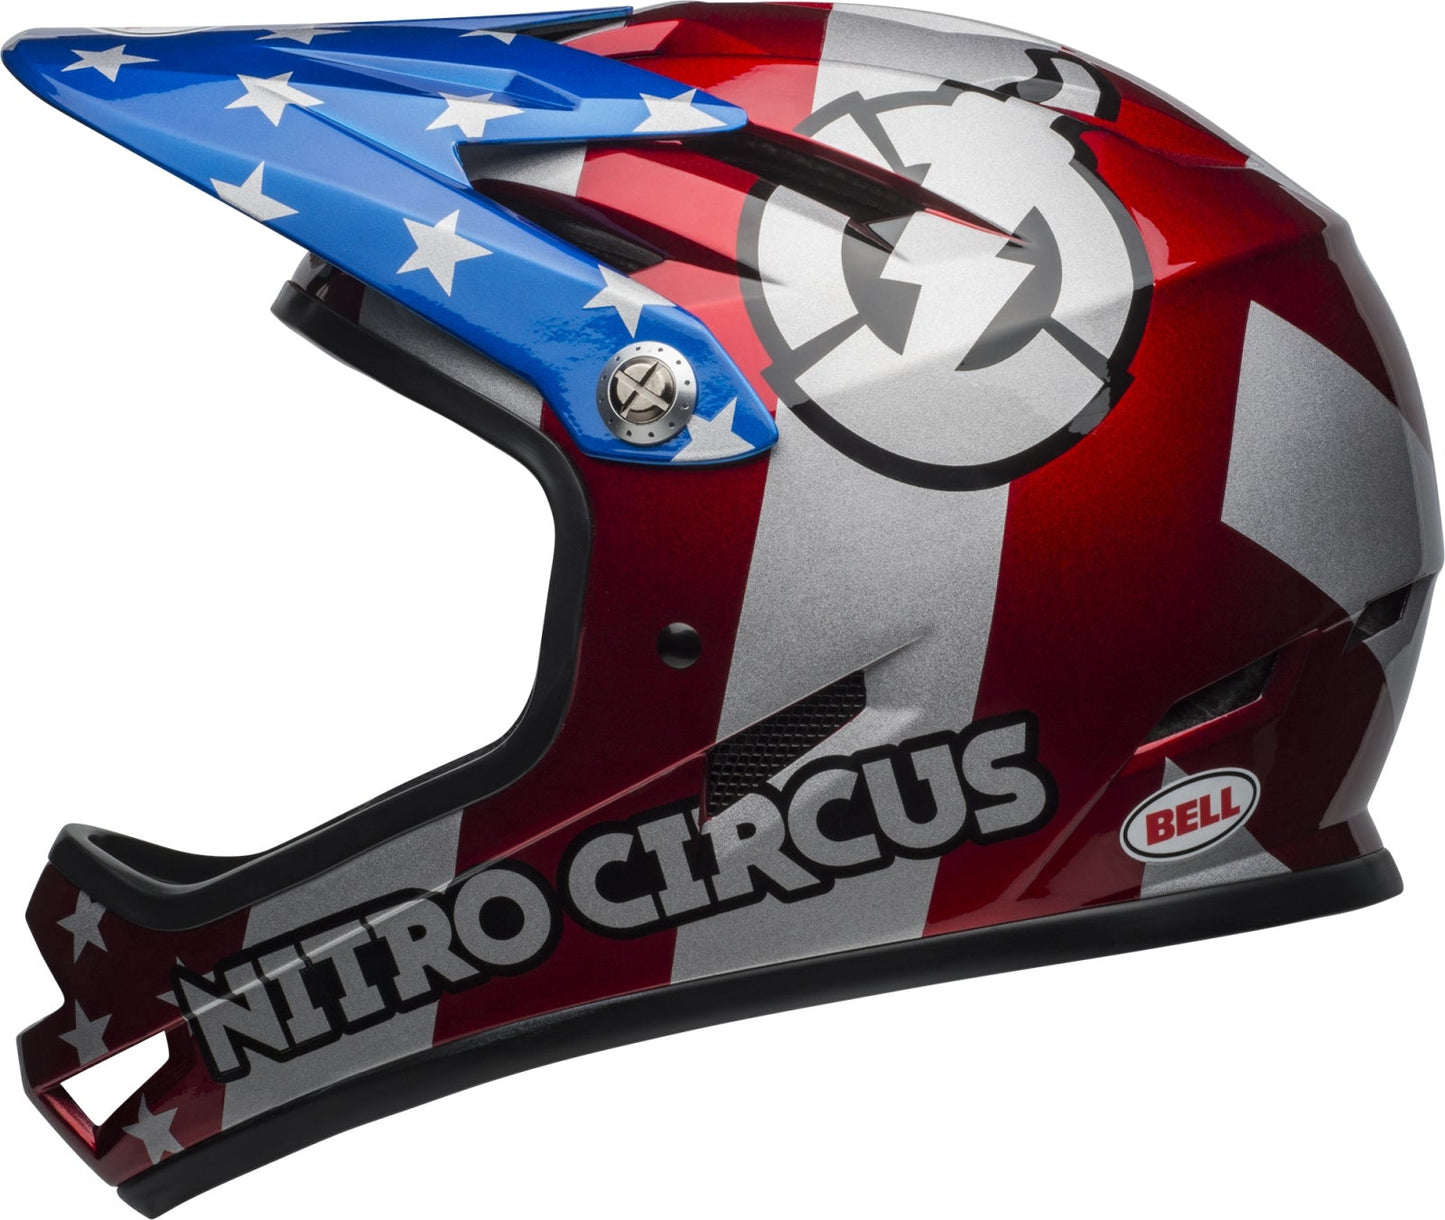 Bell Sanction Nitro Circus helmet